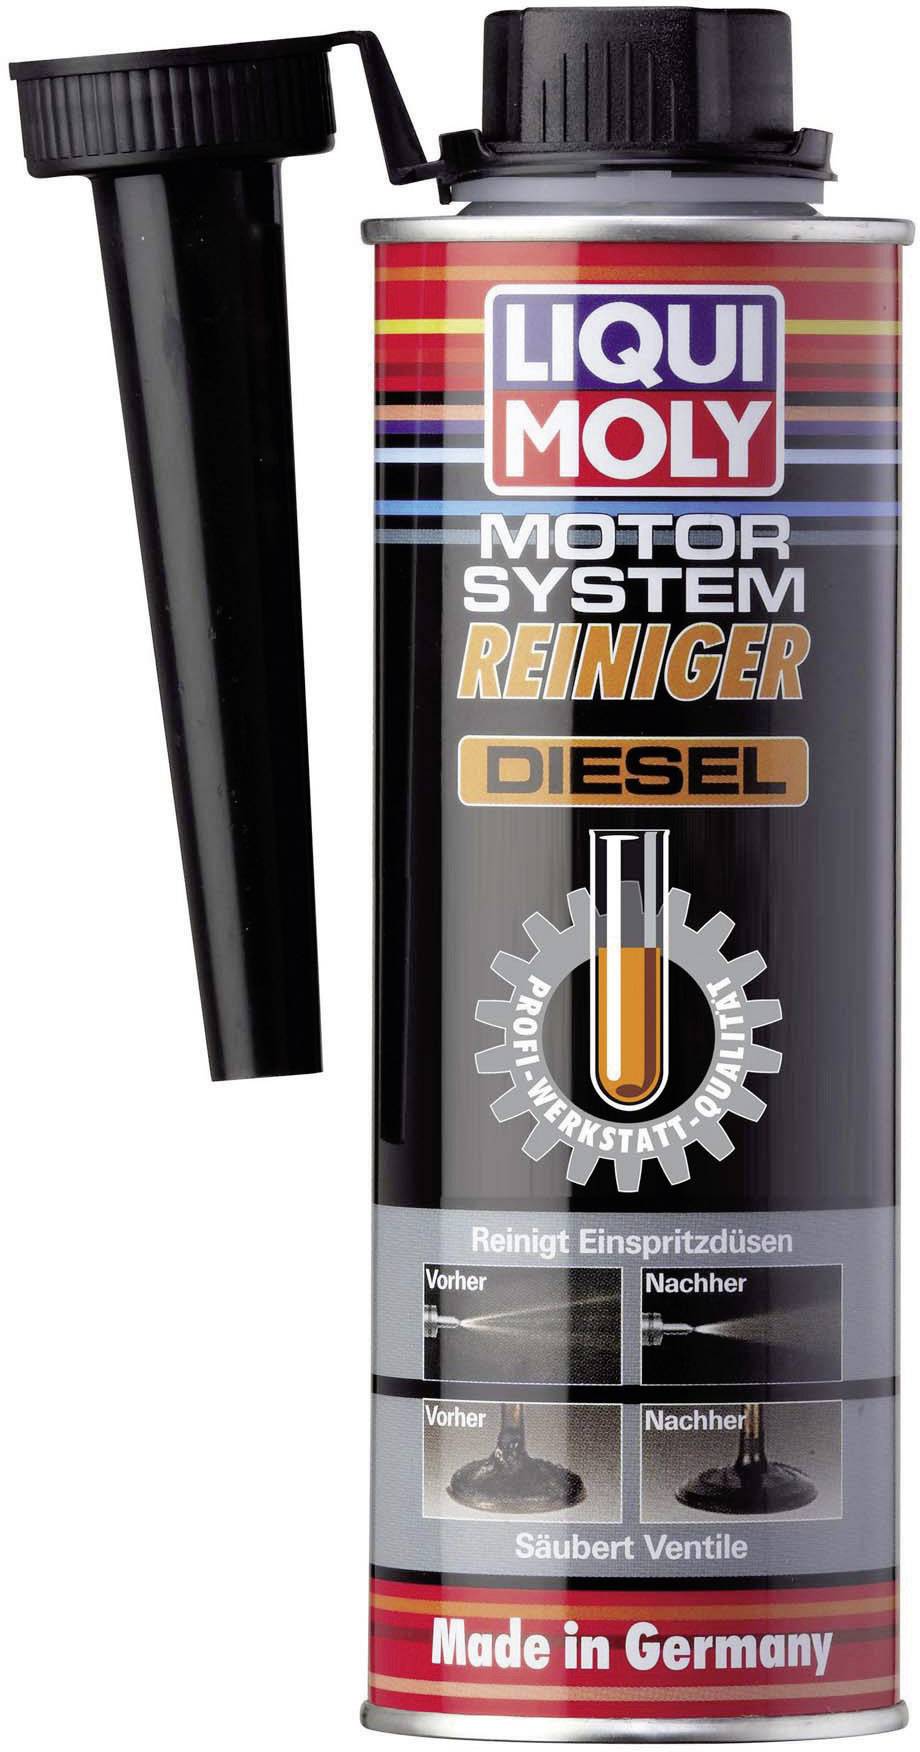 LIQUI MOLY 4x 300ml Motor System Reiniger Diesel 5128 günstig